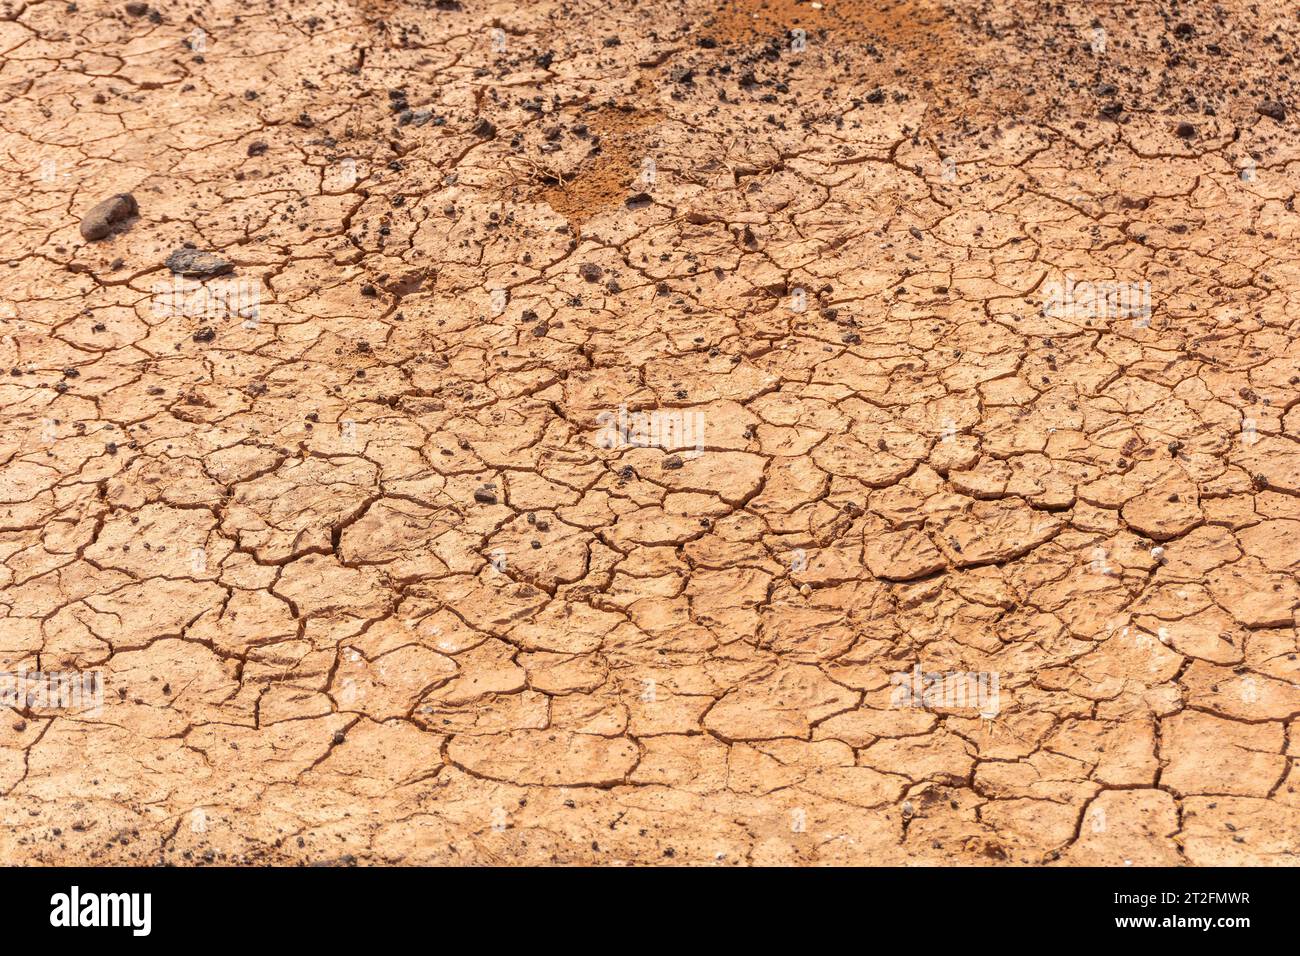 Viel Dürre in Las Salinas de Lobos auf der Isla de Lobos, neben der Nordküste der Insel Fuerteventura, Kanarische Inseln. Spanien Stockfoto